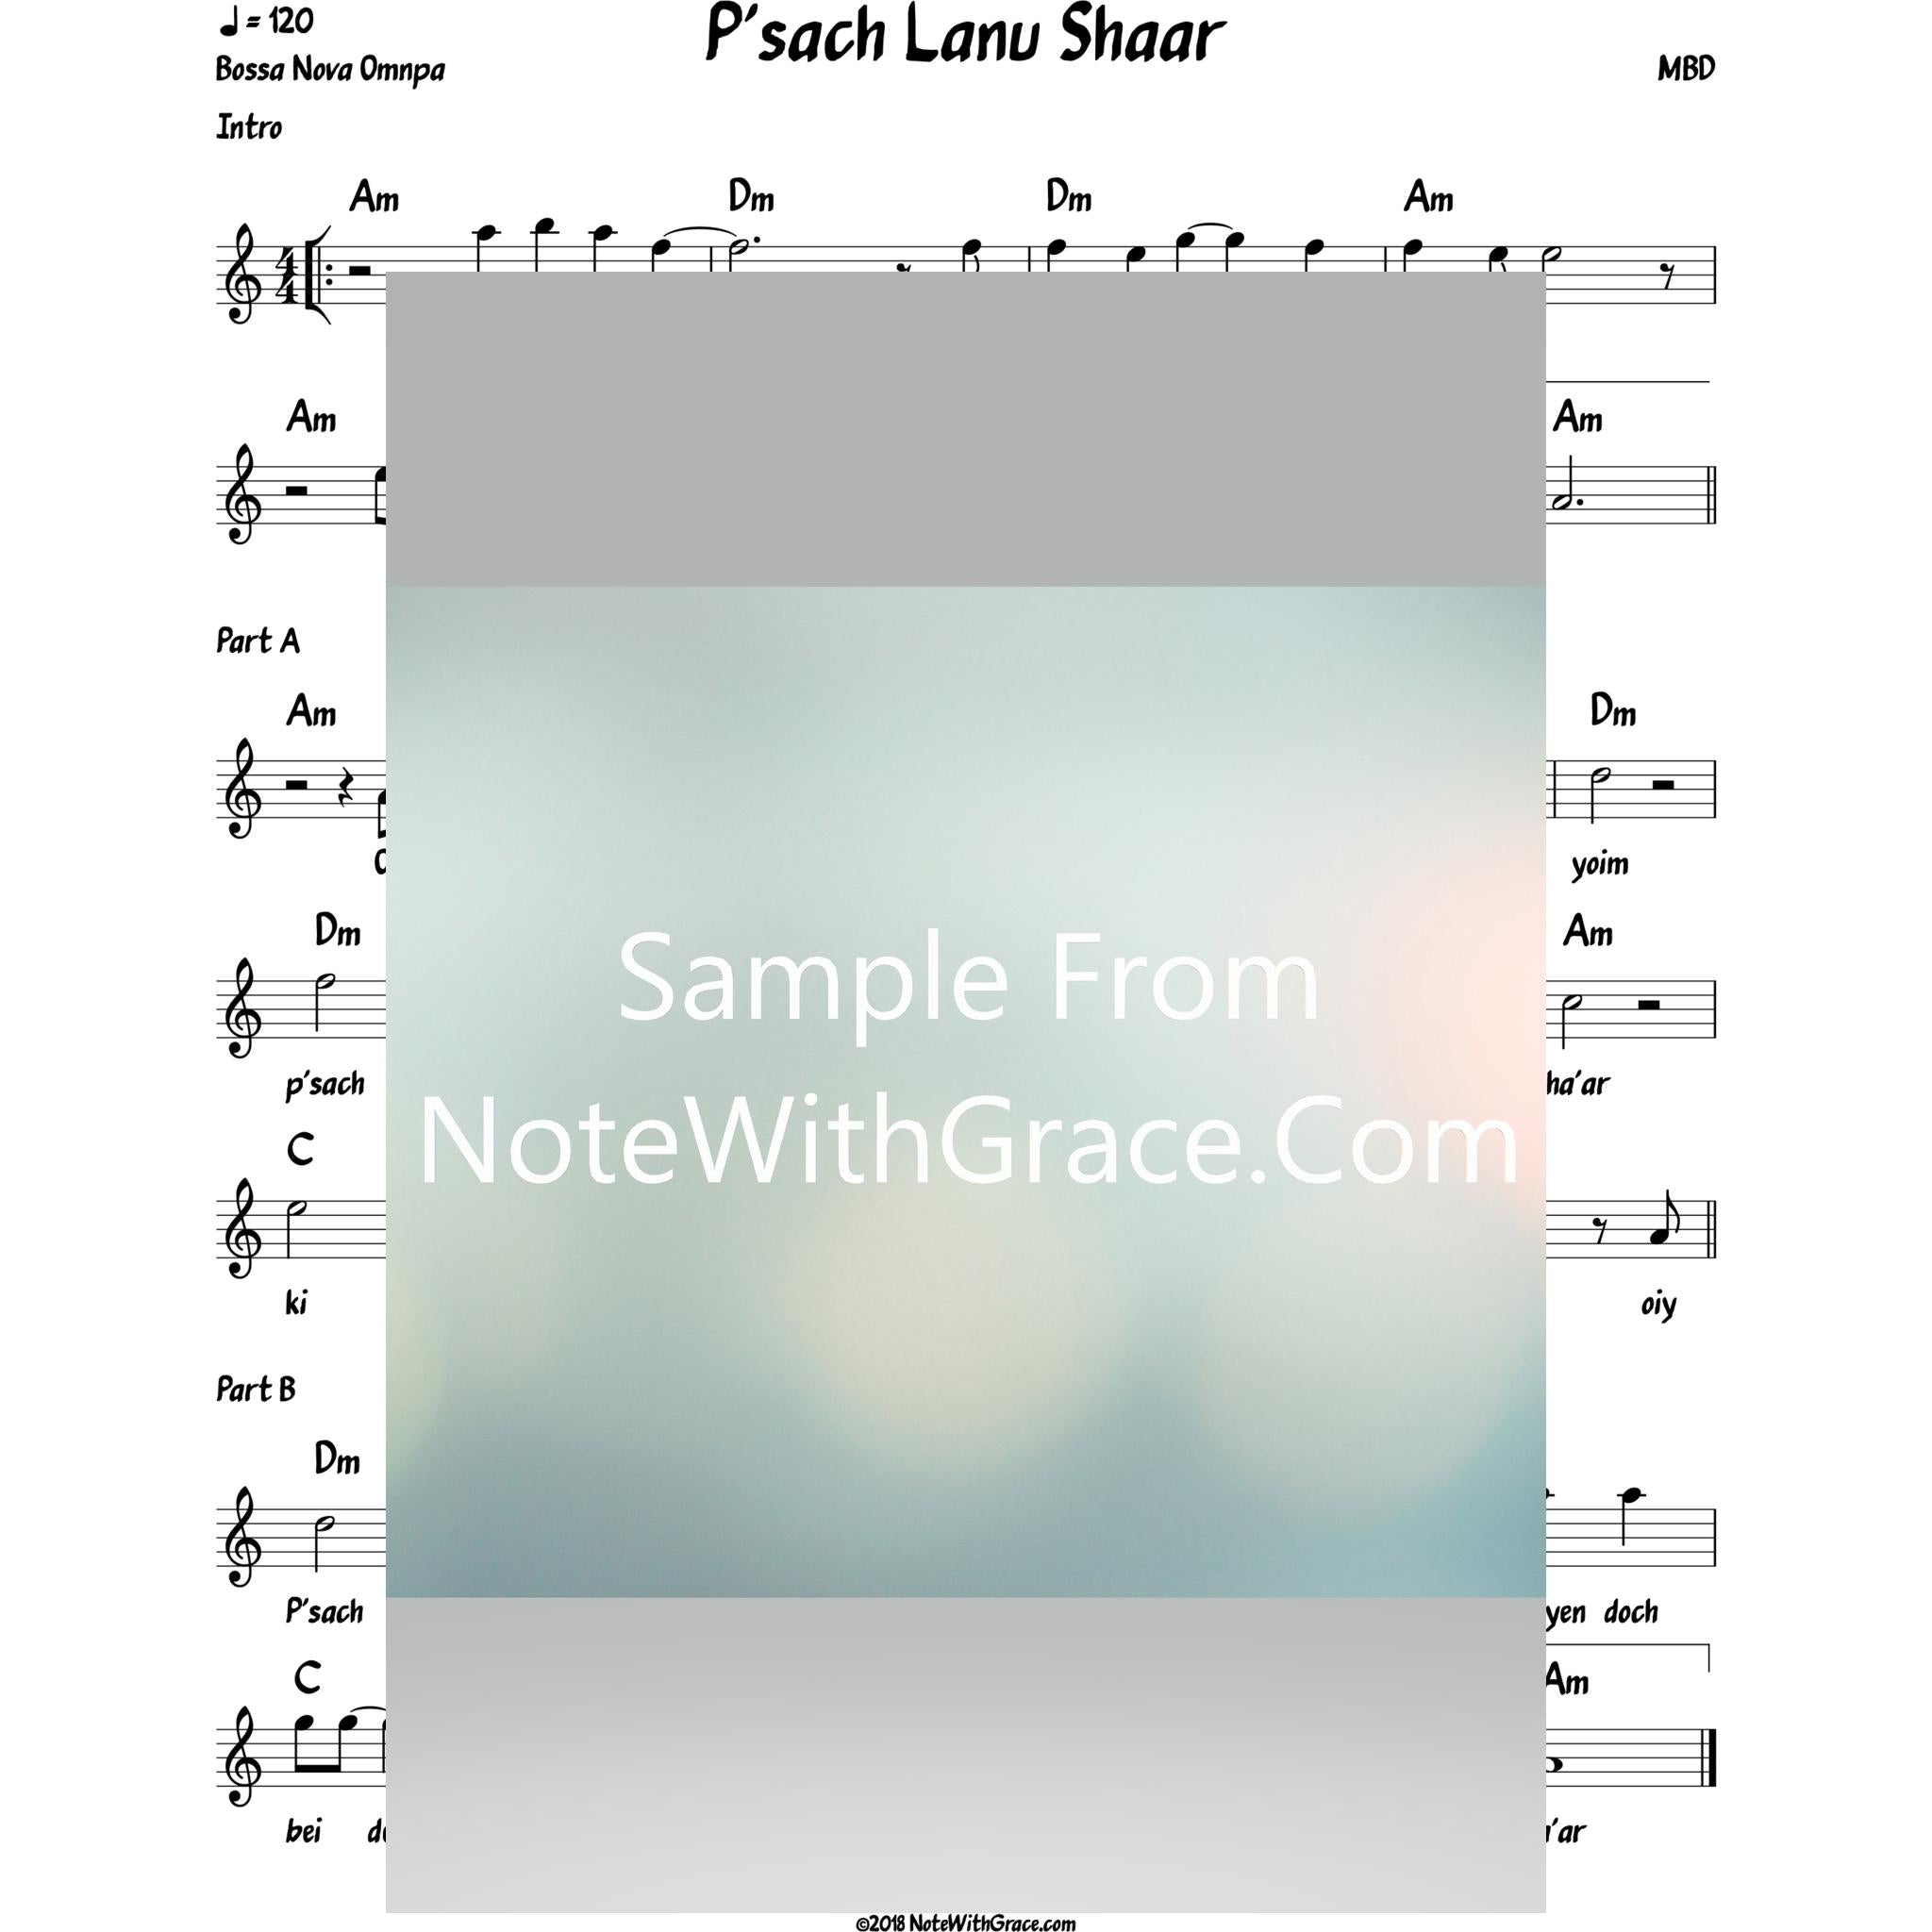 P'sach Lanu Shaar Lead Sheet (MBD)-Sheet music-NoteWithGrace.com